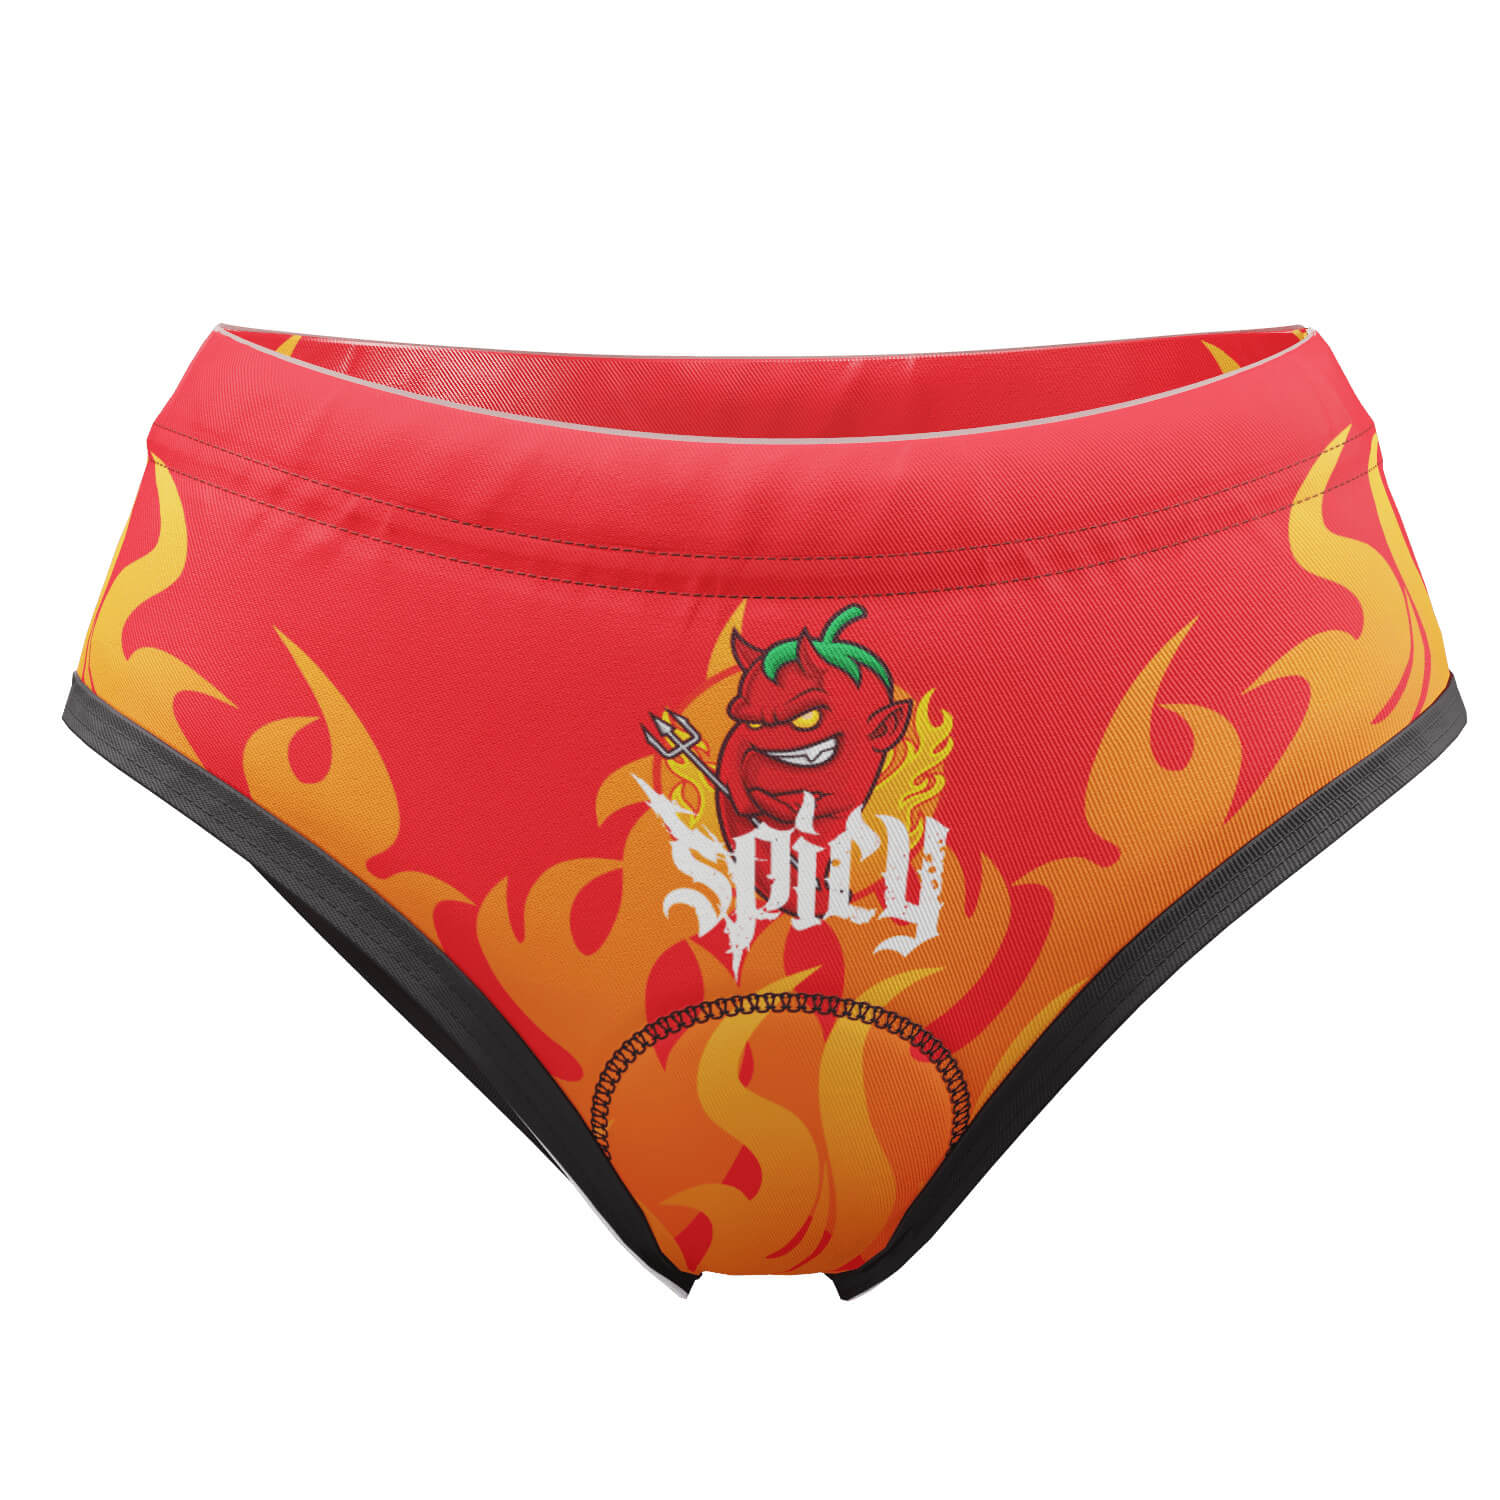 Women's Spicy Flames Gel Padded Cycling Underwear-Briefs – Online